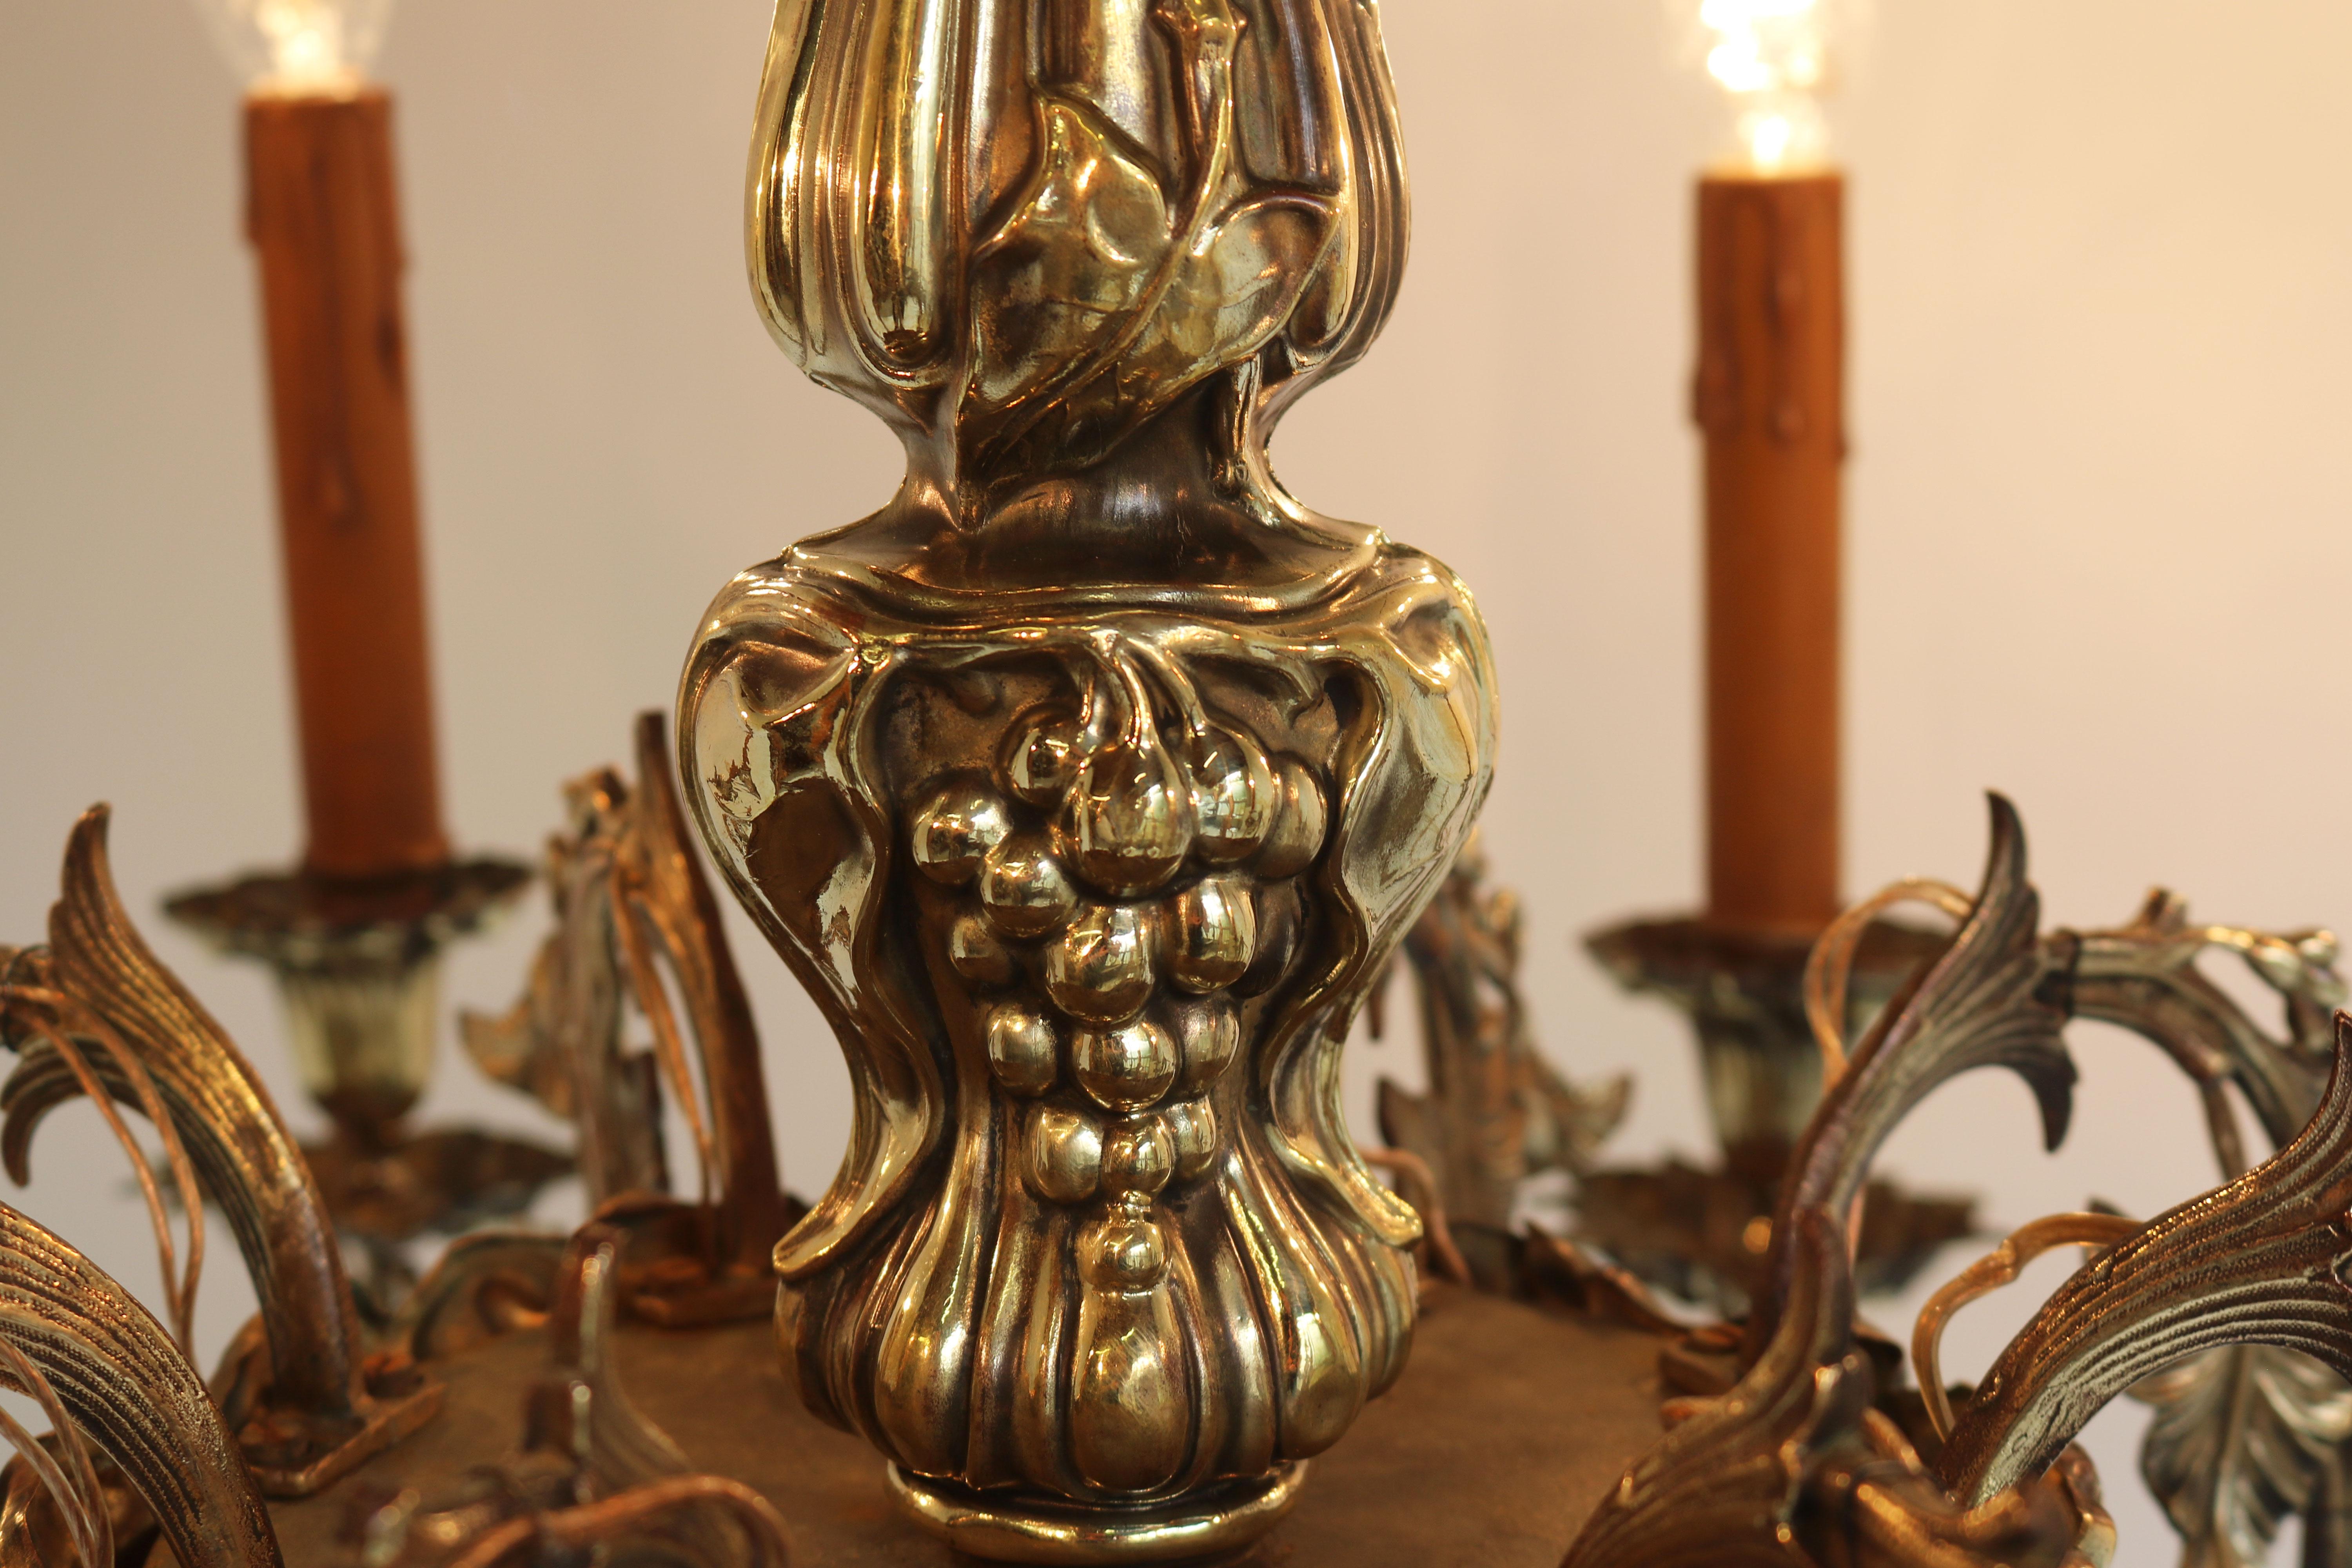 French Art Nouveau Hammered Brass Chandelier 1890 Antique 8 Lights Gold Floral For Sale 3